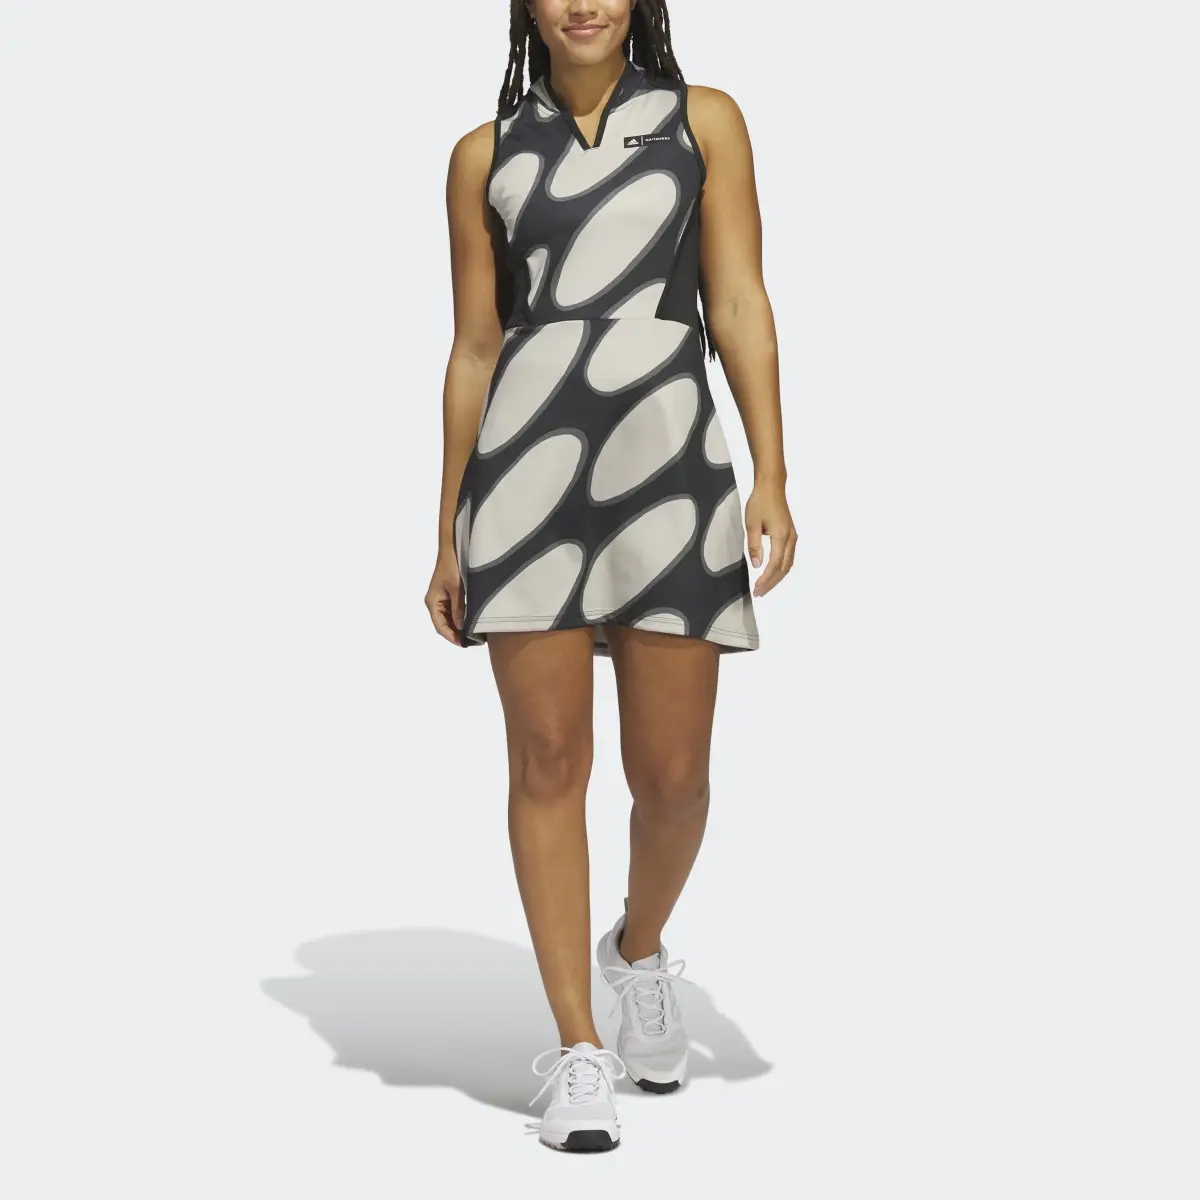 Adidas Marimekko Golf Dress. 1